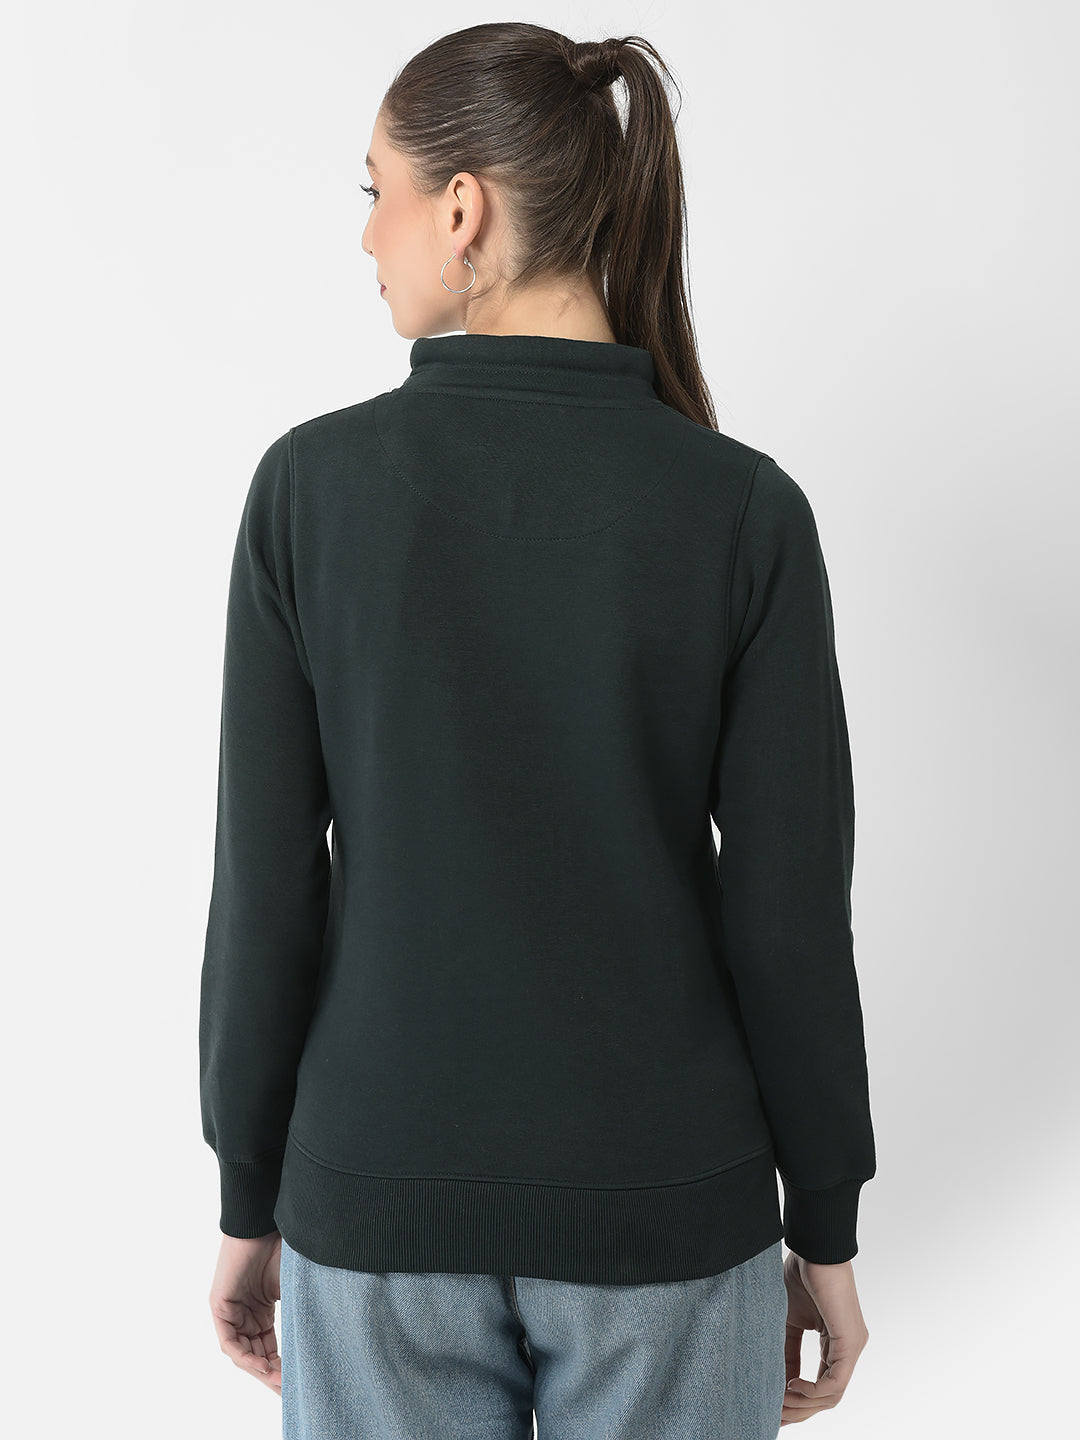  Green Sequenced Typography Sweatshirt 